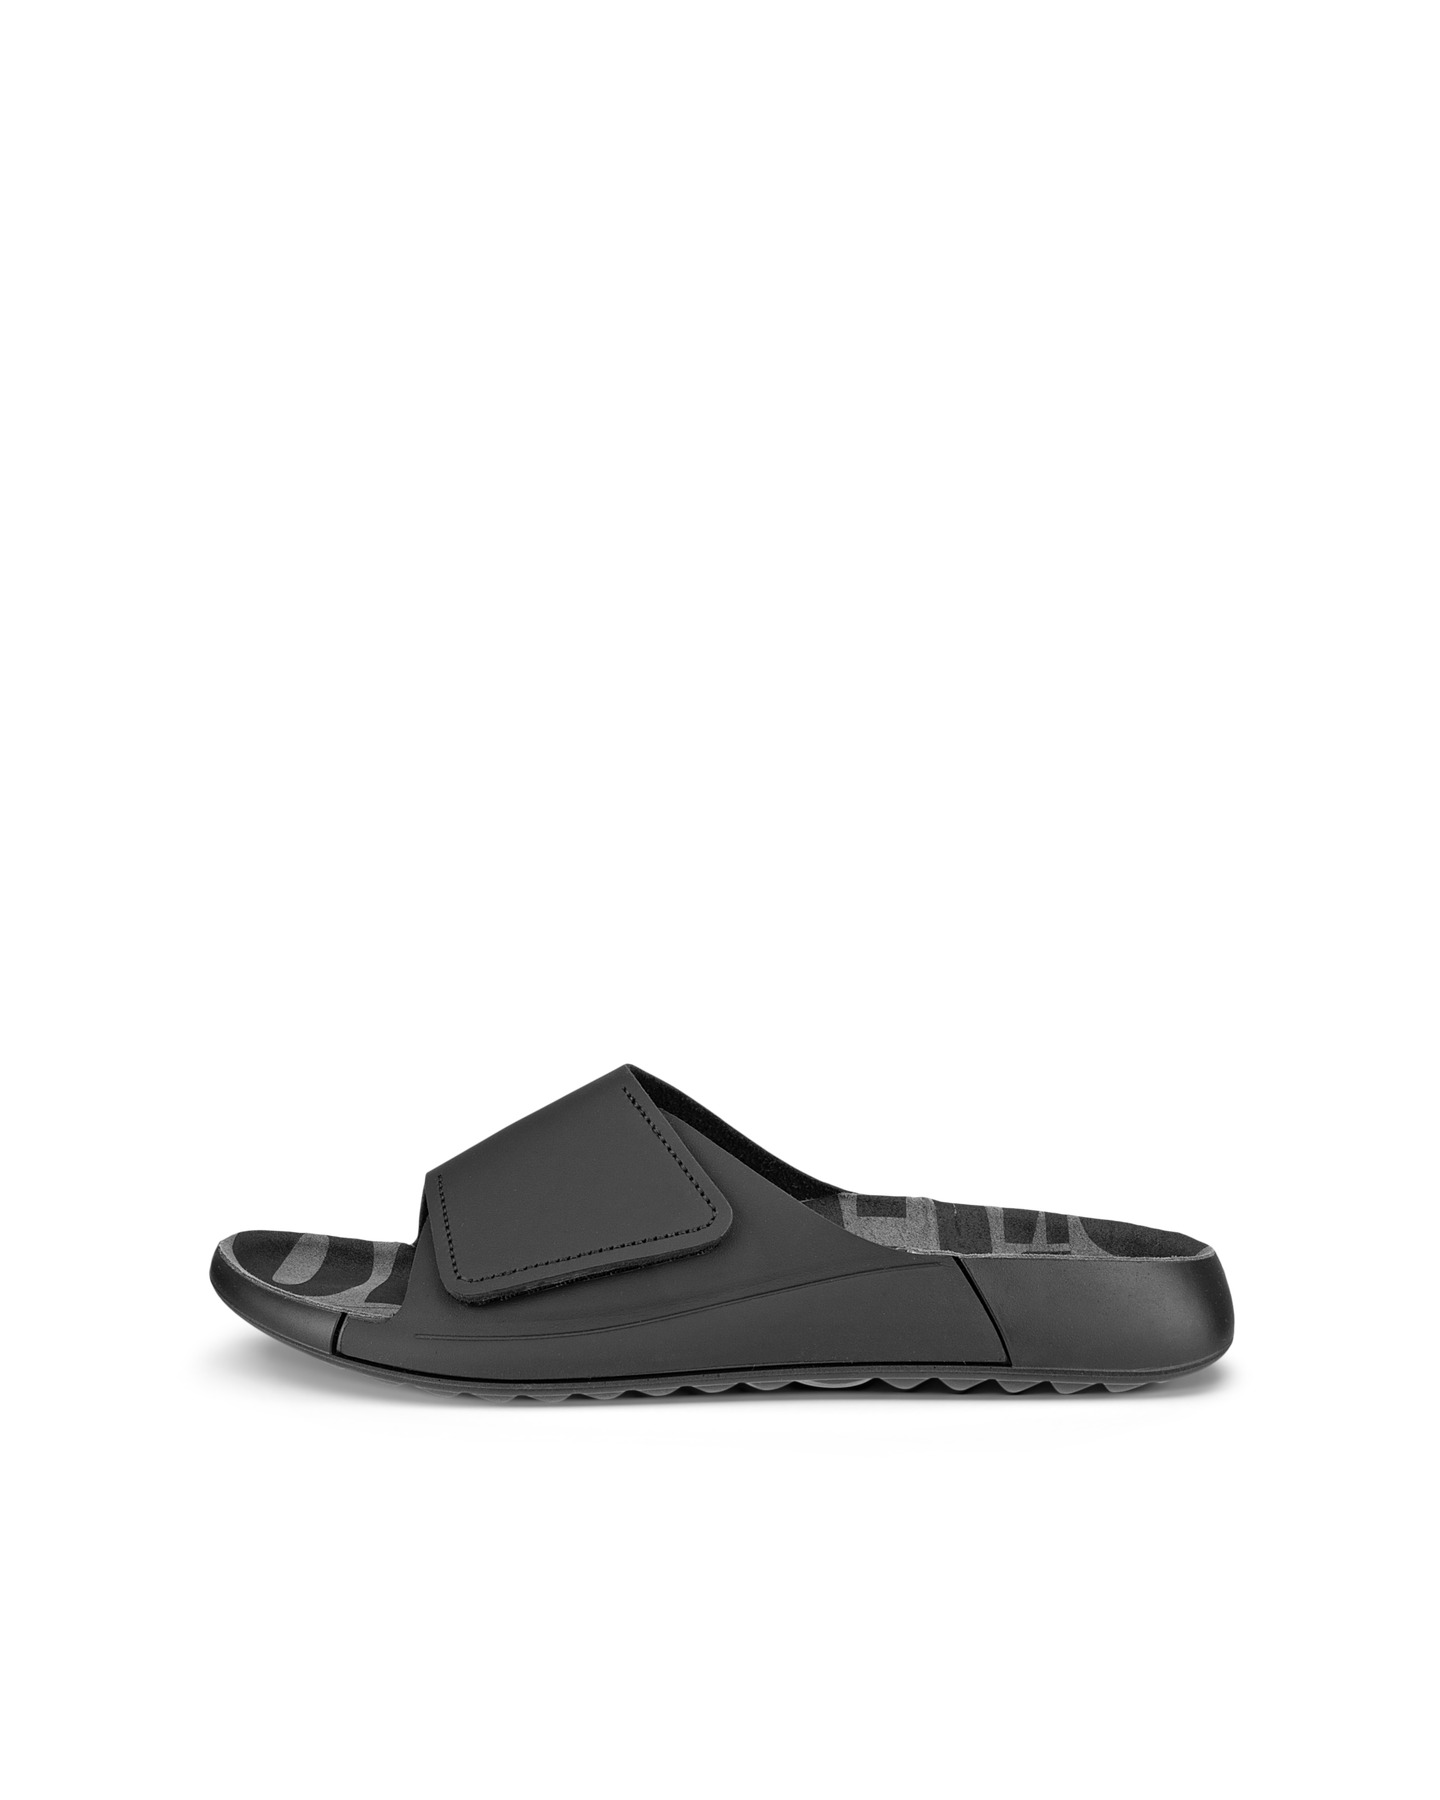 ECCO Women's Cozmo Slide Sandal Size 12 Leather Black